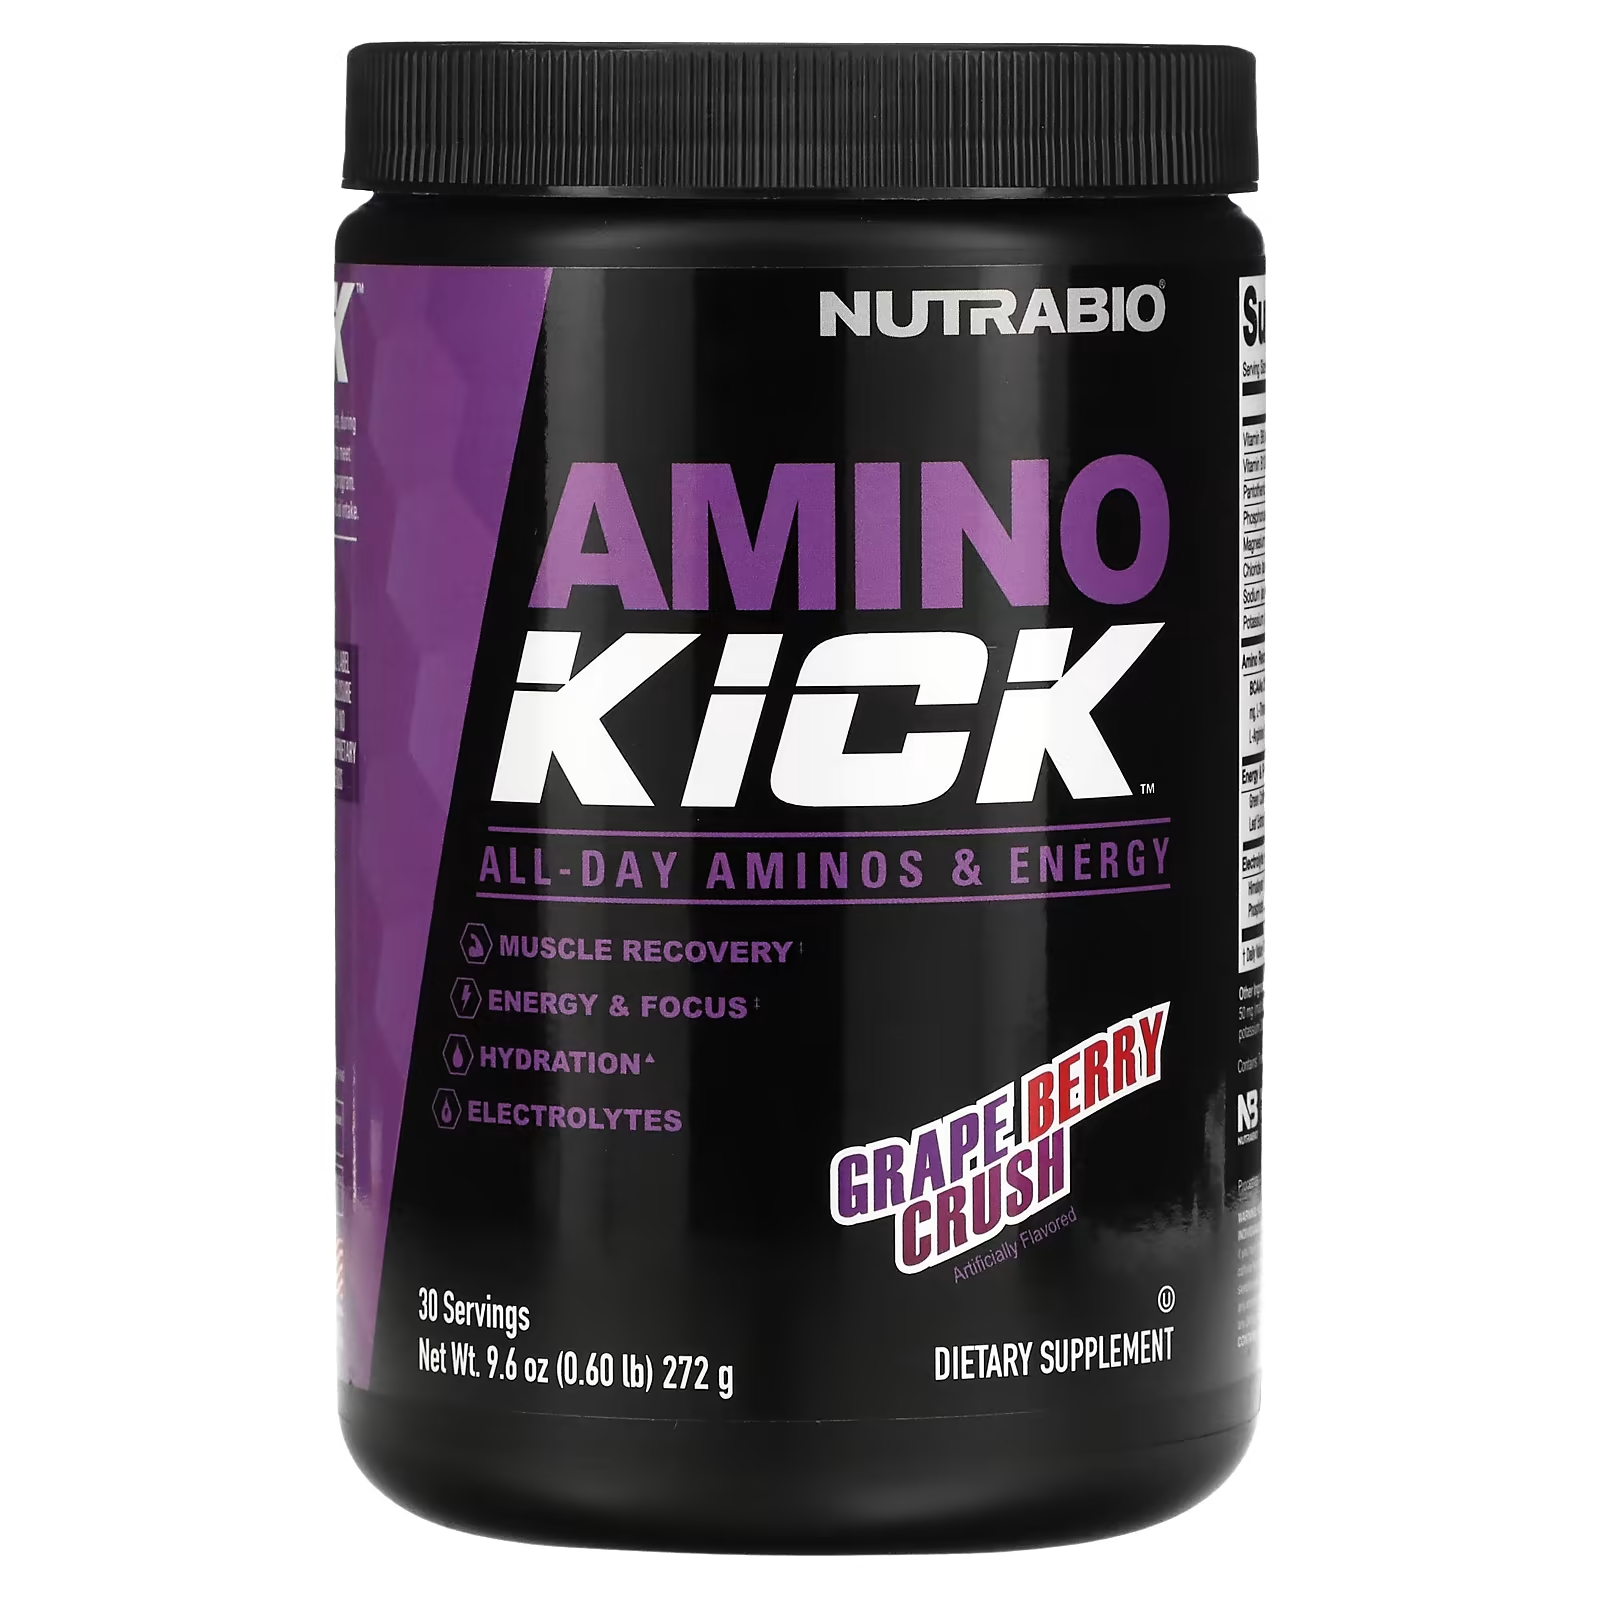 Пищевая добавка NutraBio Amino Kick Grape Berry Crush, 272 г nutrabio labs pre workout performance igniter grape berry crush 585 г 1 29 фунта